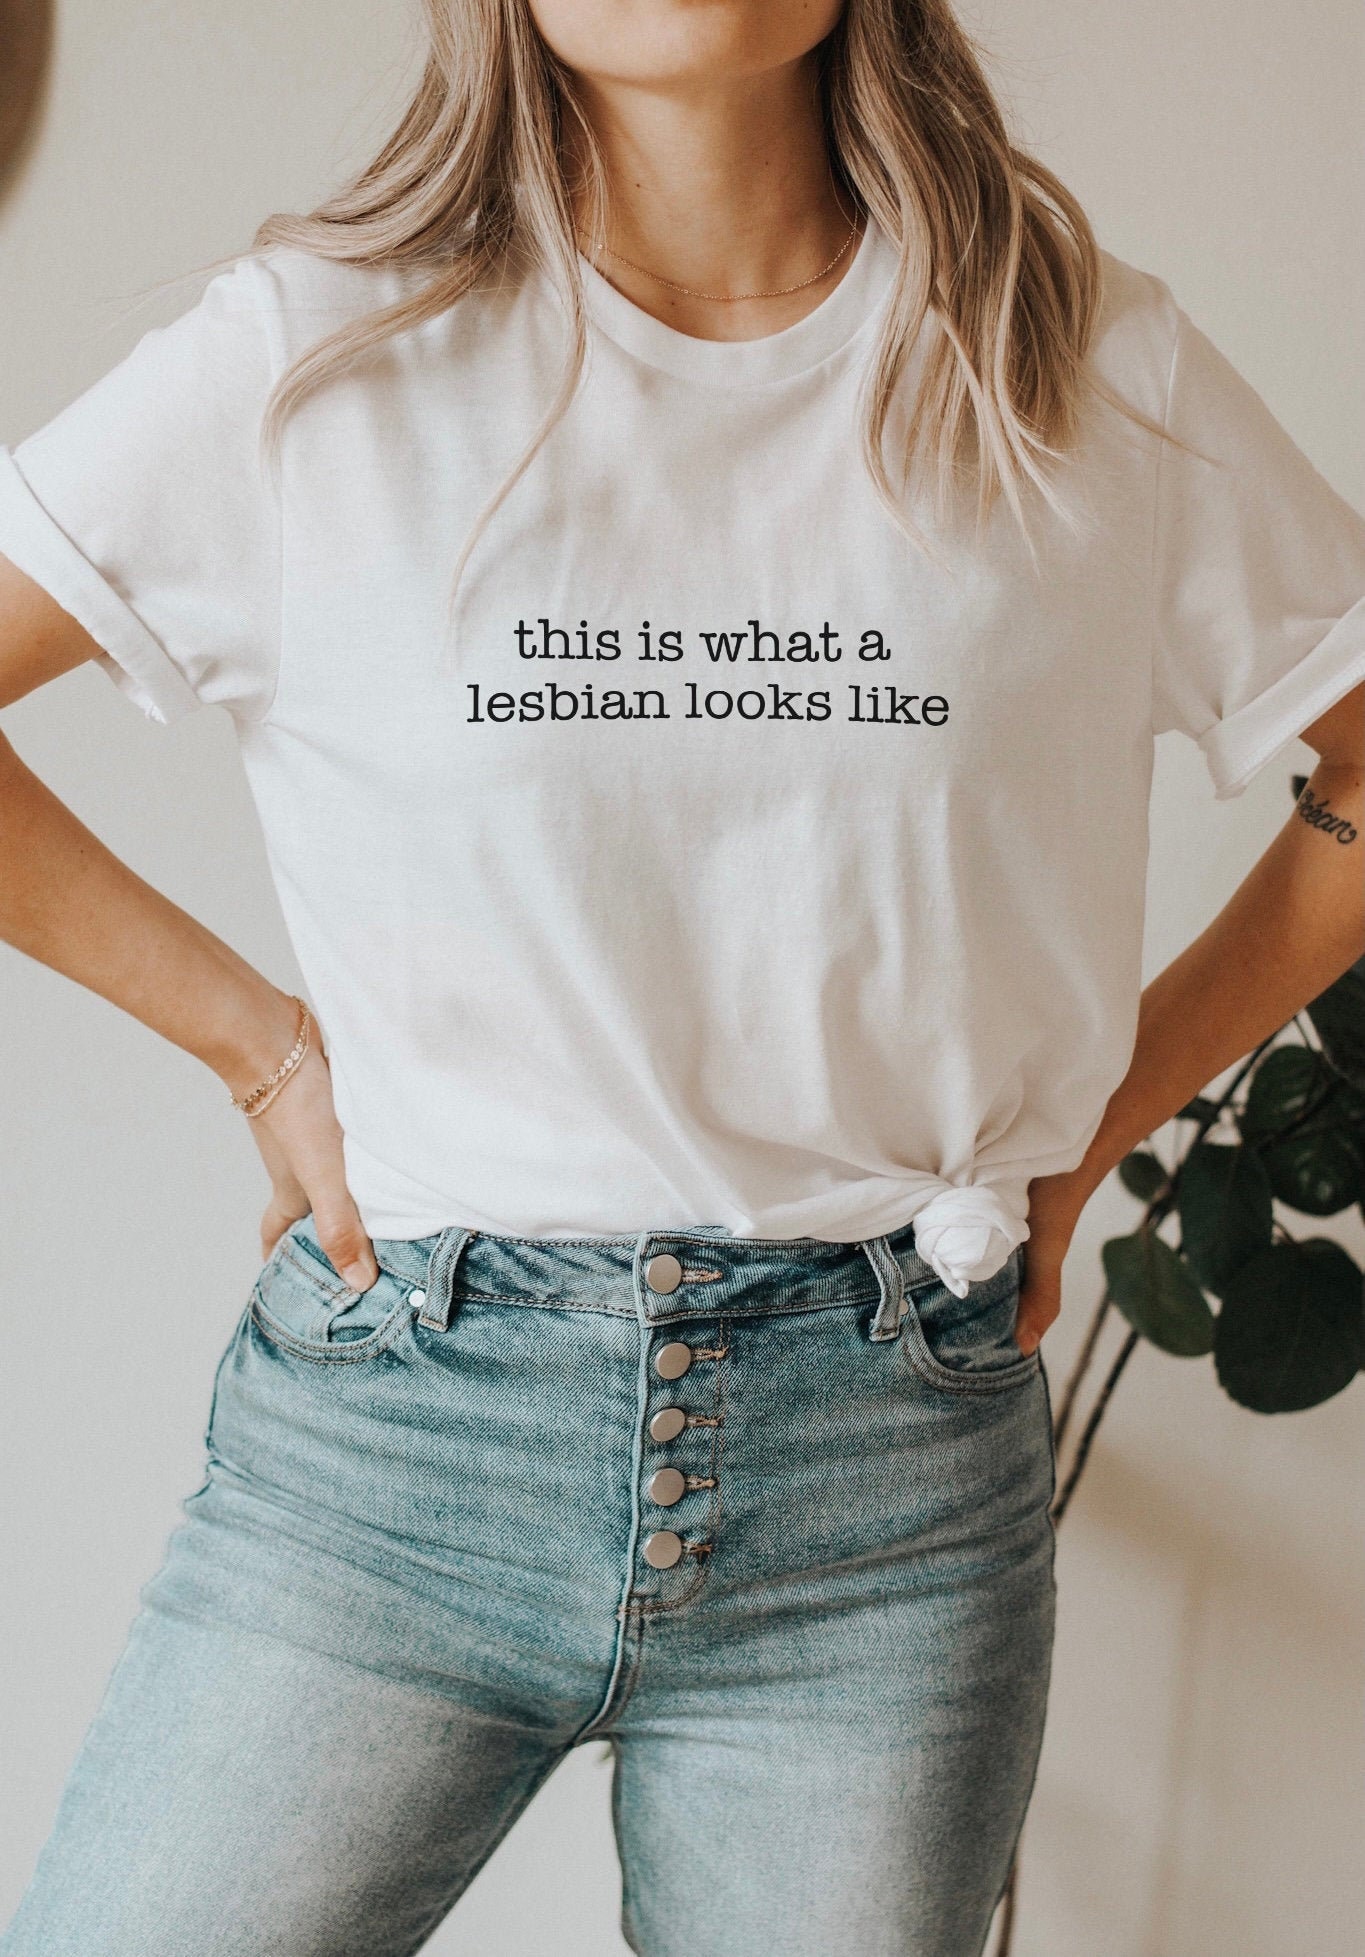 Lesbian Pride Shirt Subtle Lesbian Shirt Pride Shirts | Etsy